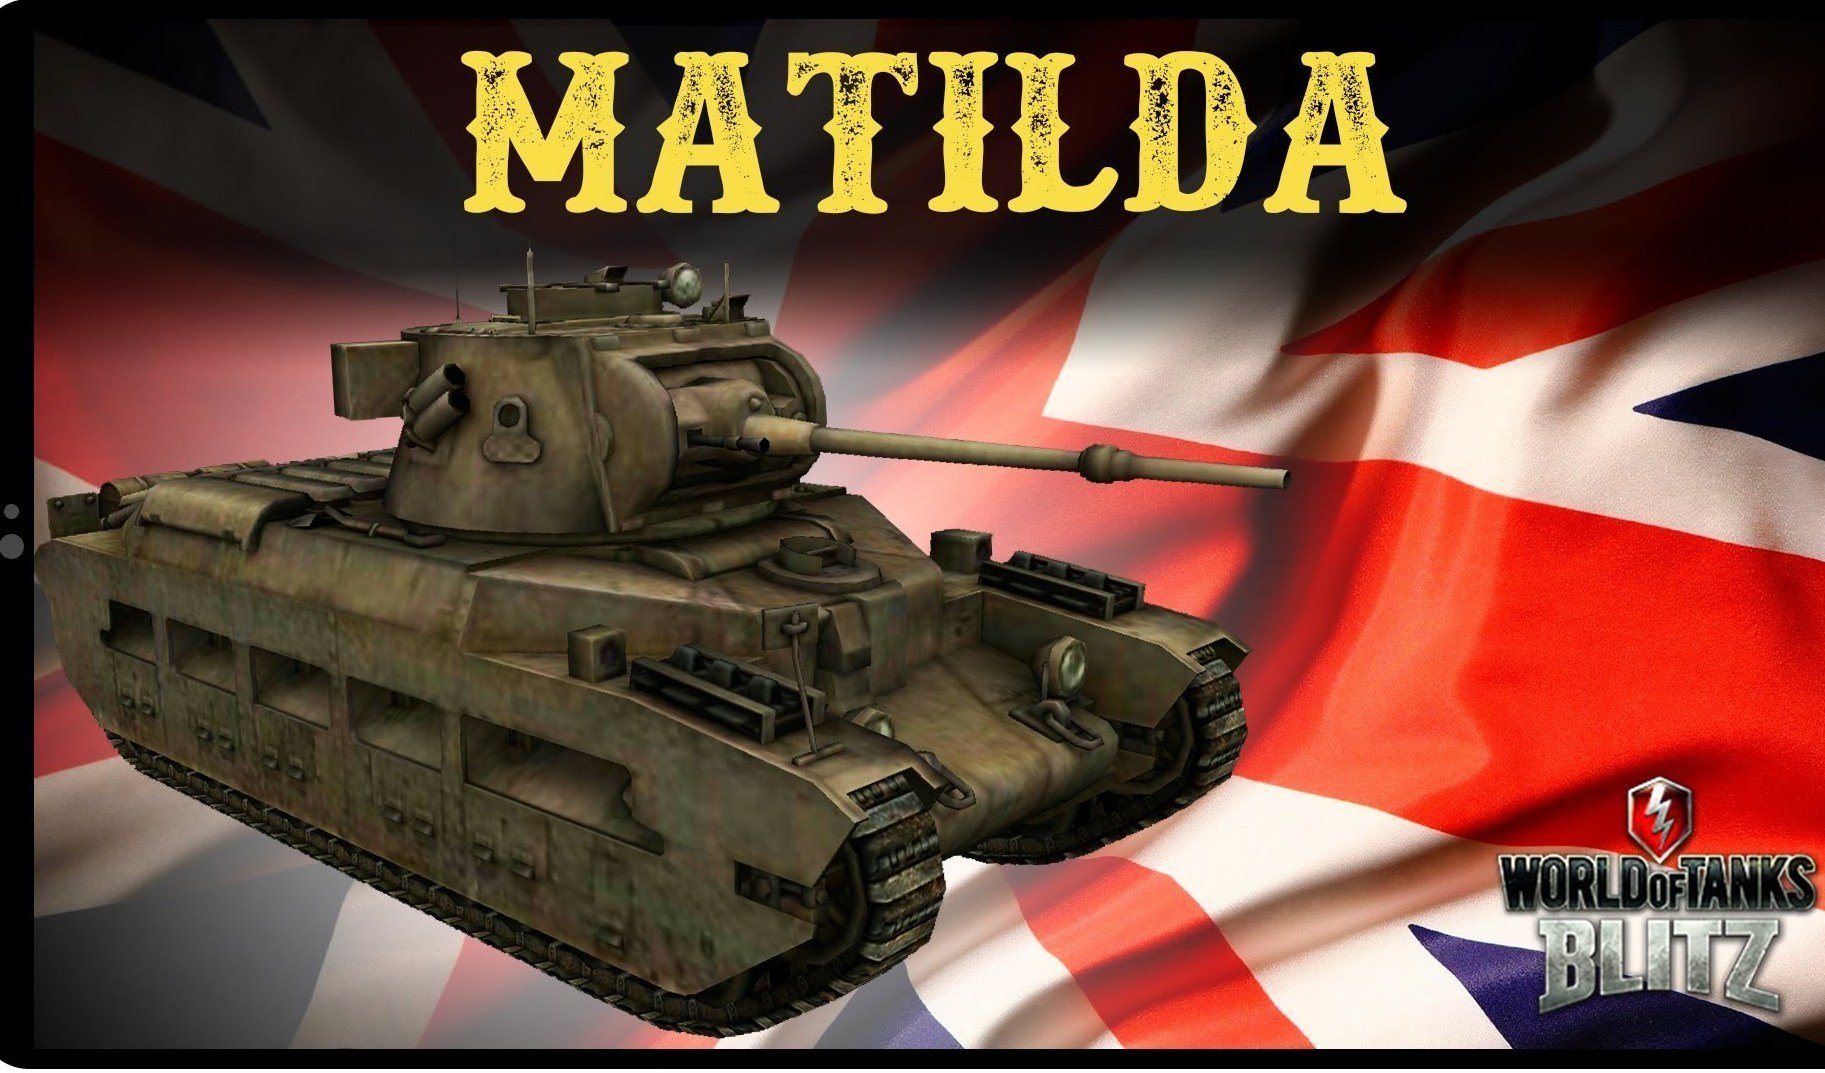 Matilda 4. Matilda IV World of Tanks Blitz.